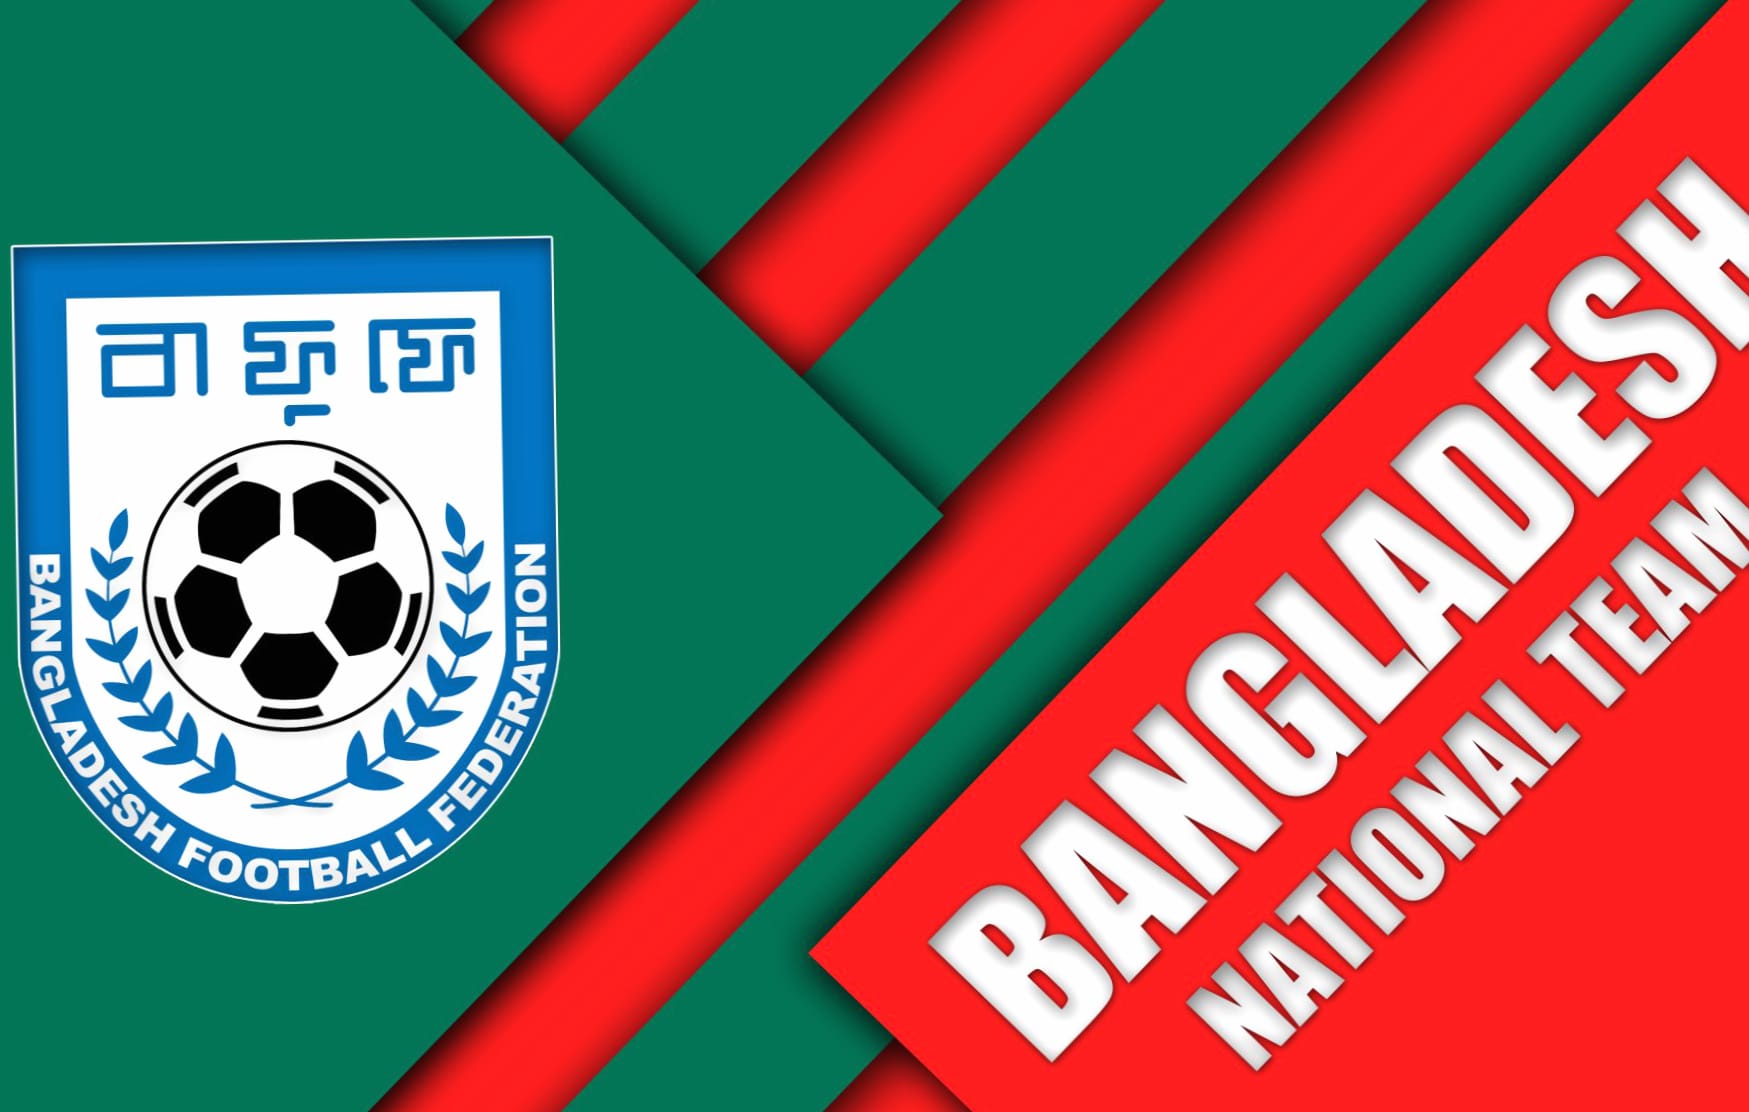 Bangladesh National Football Team at 1024 x 1024 iPad size wallpapers HD quality